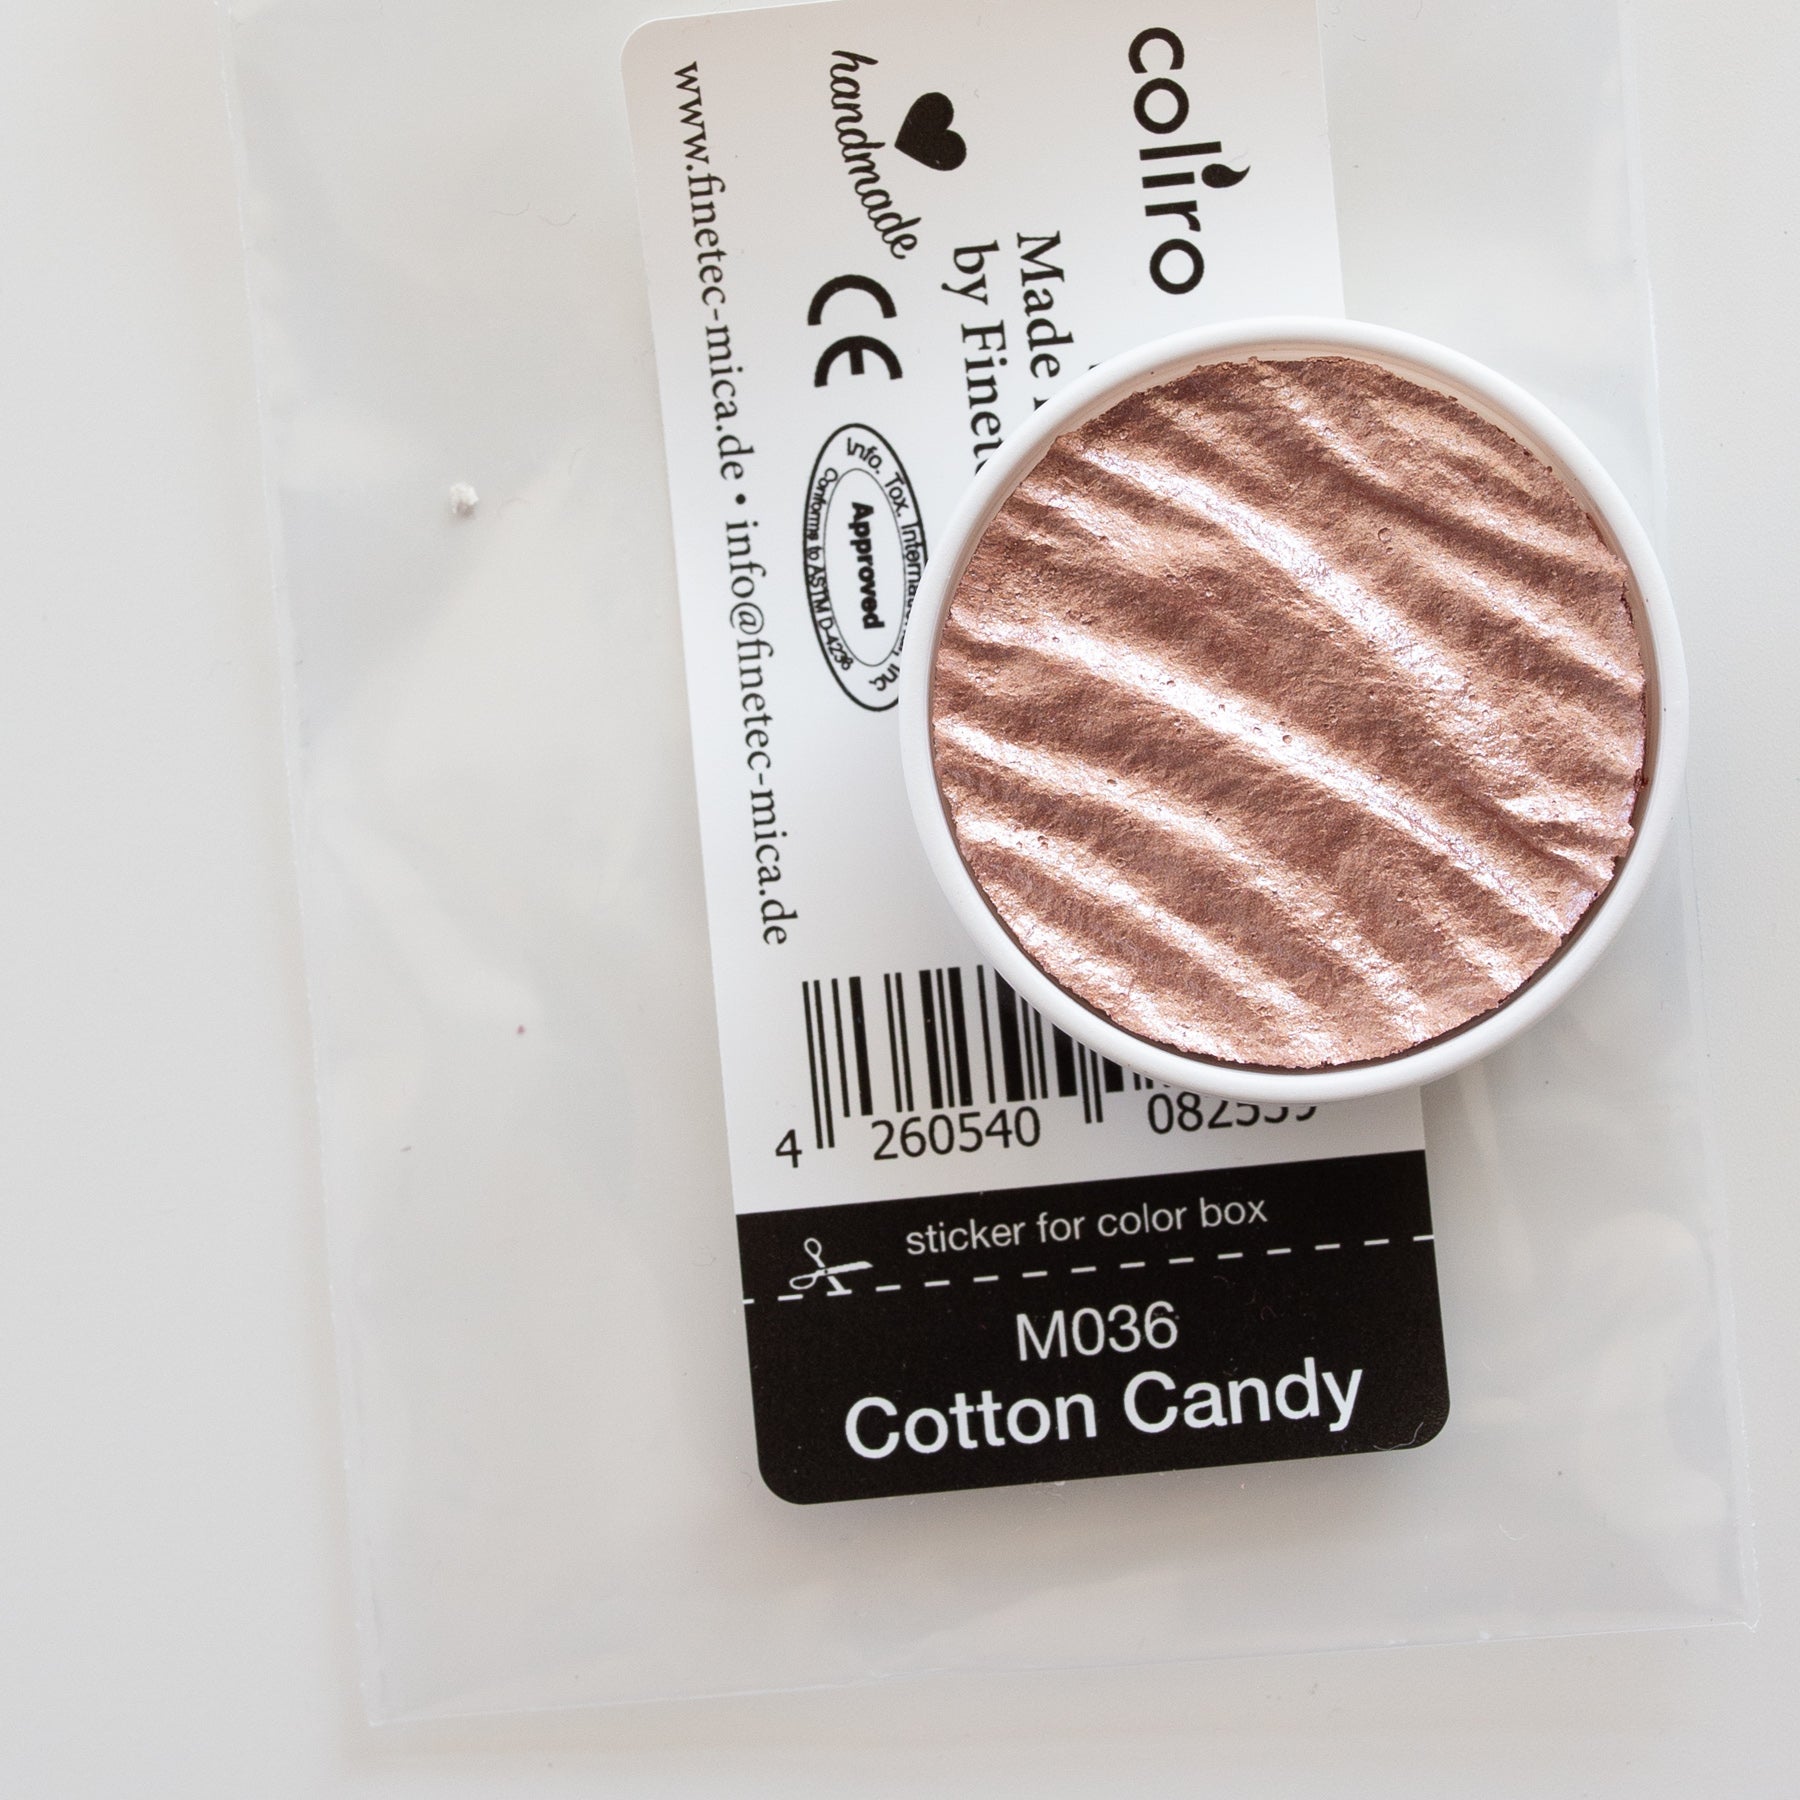 Coliro Pearlcolors M036 'Cotton Candy'